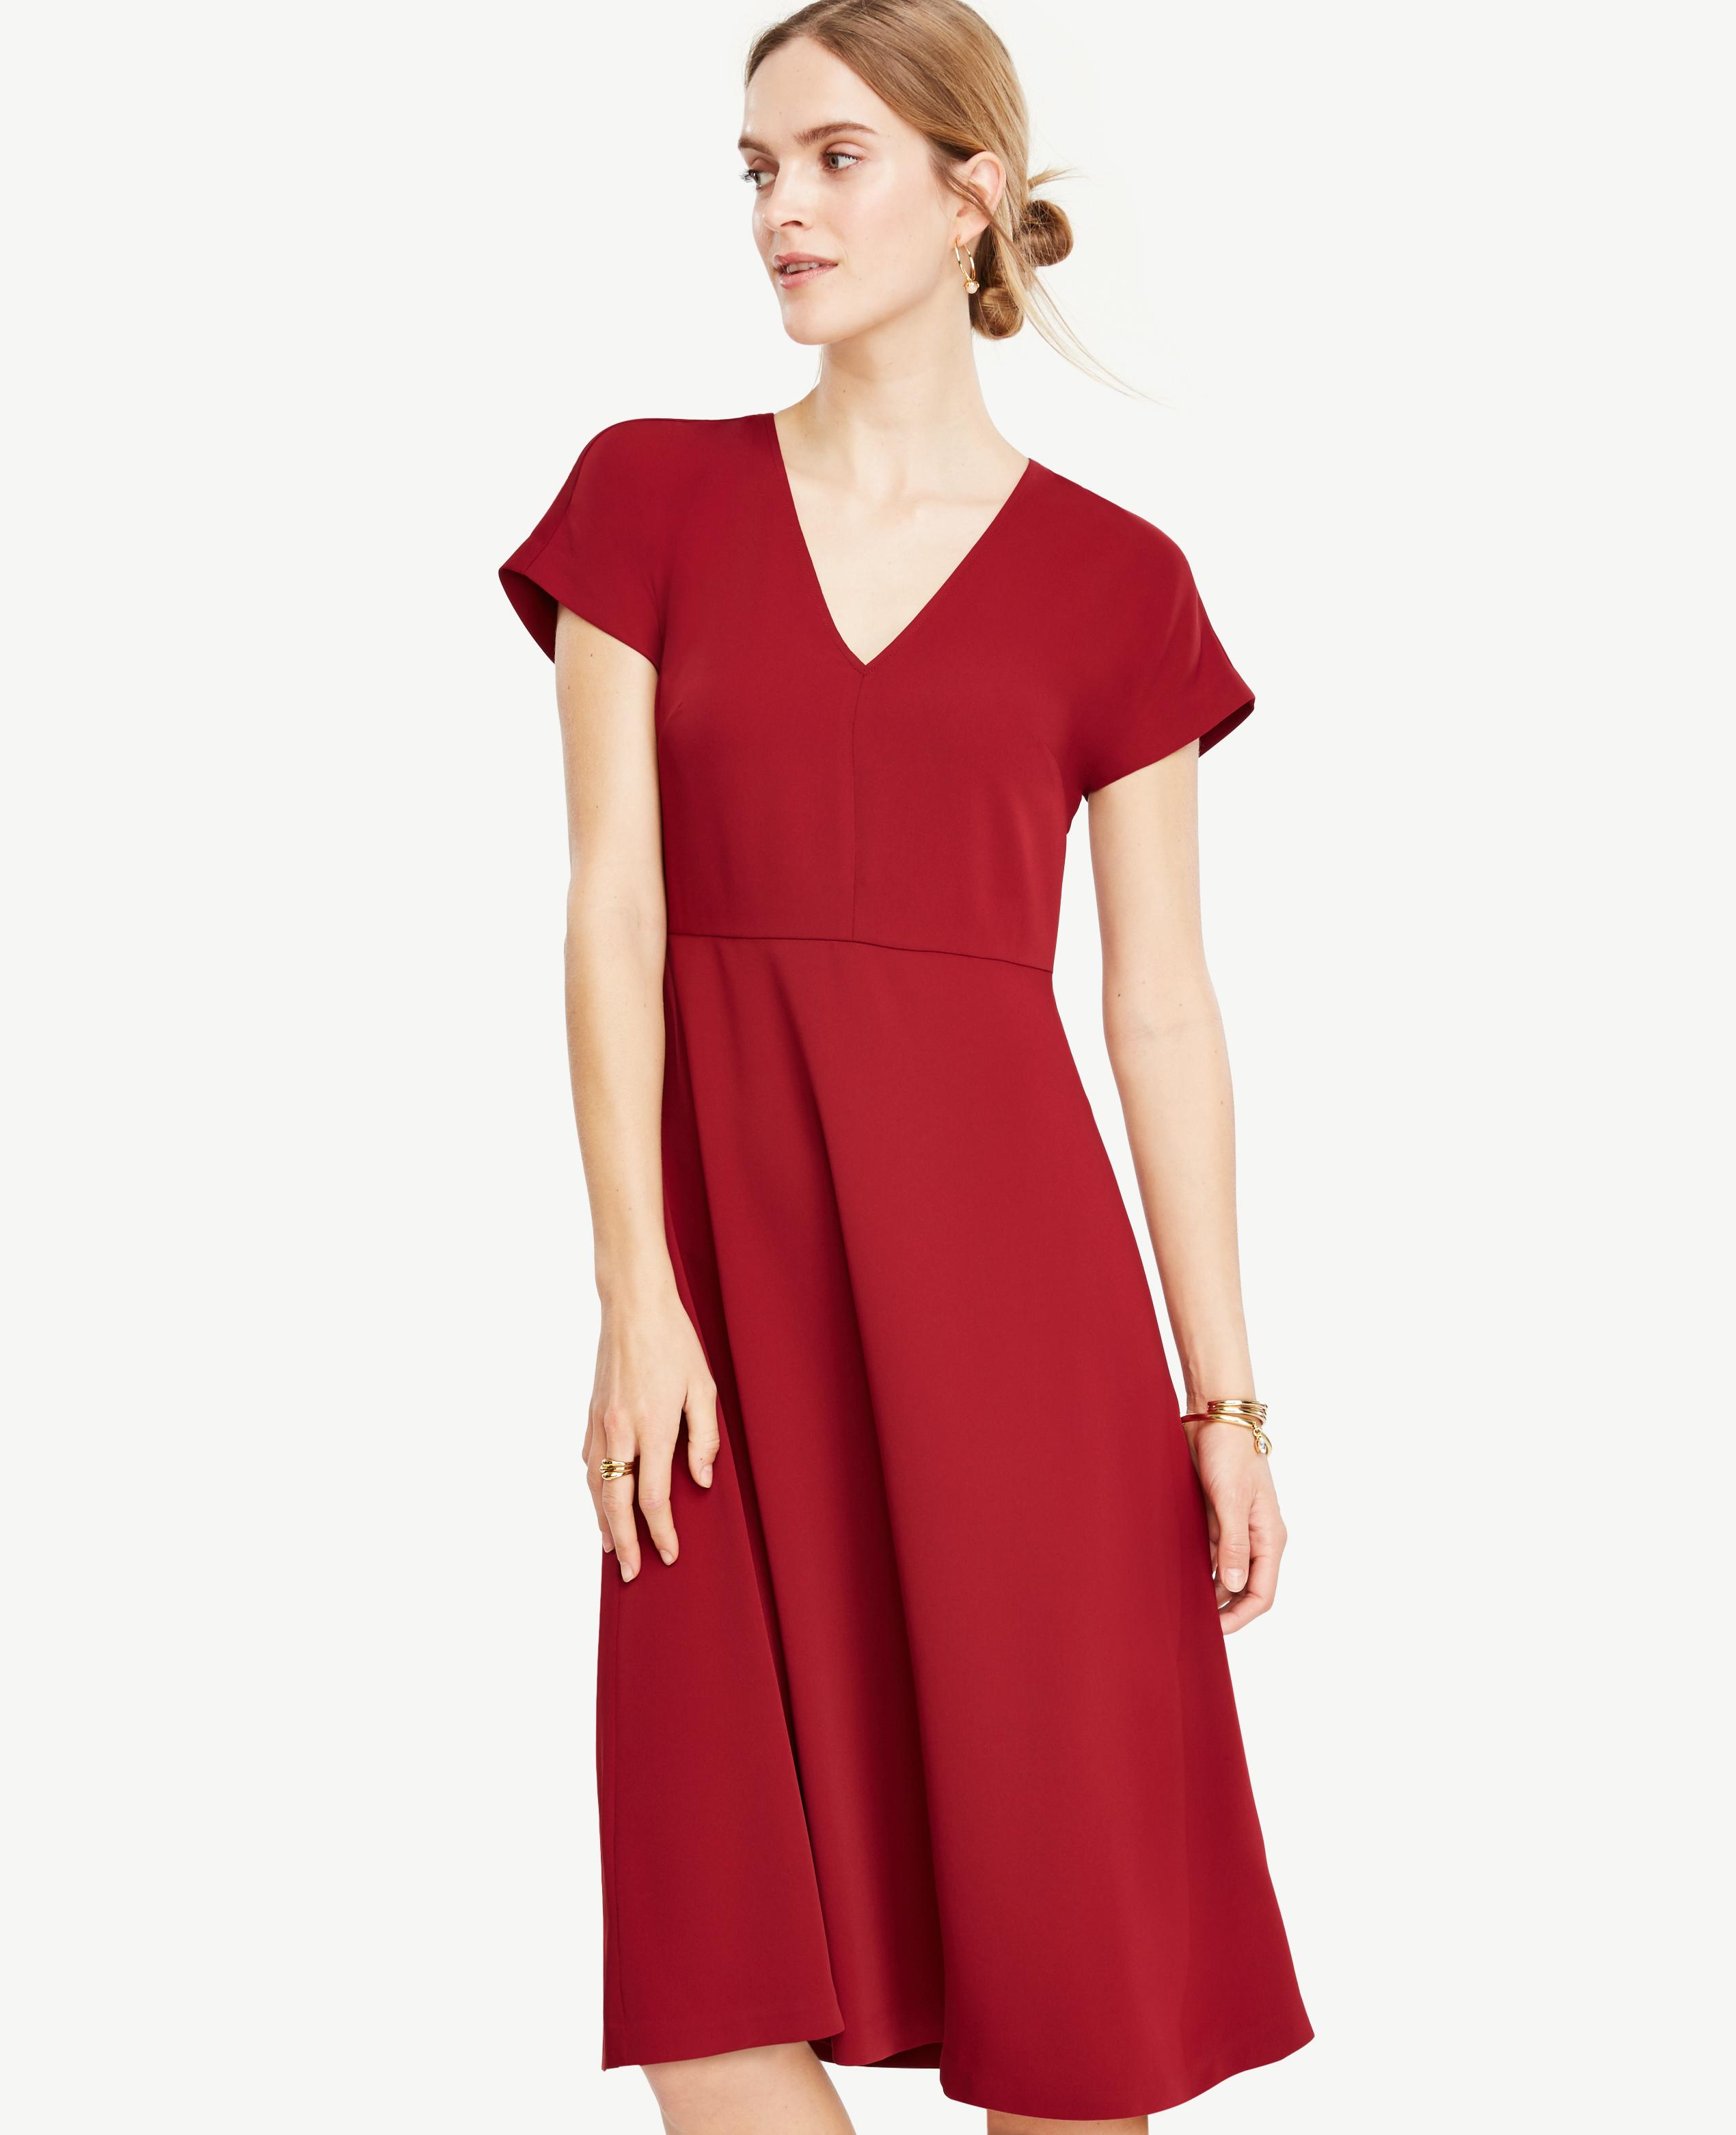 Lyst - Ann Taylor Flare Midi Dress in Red